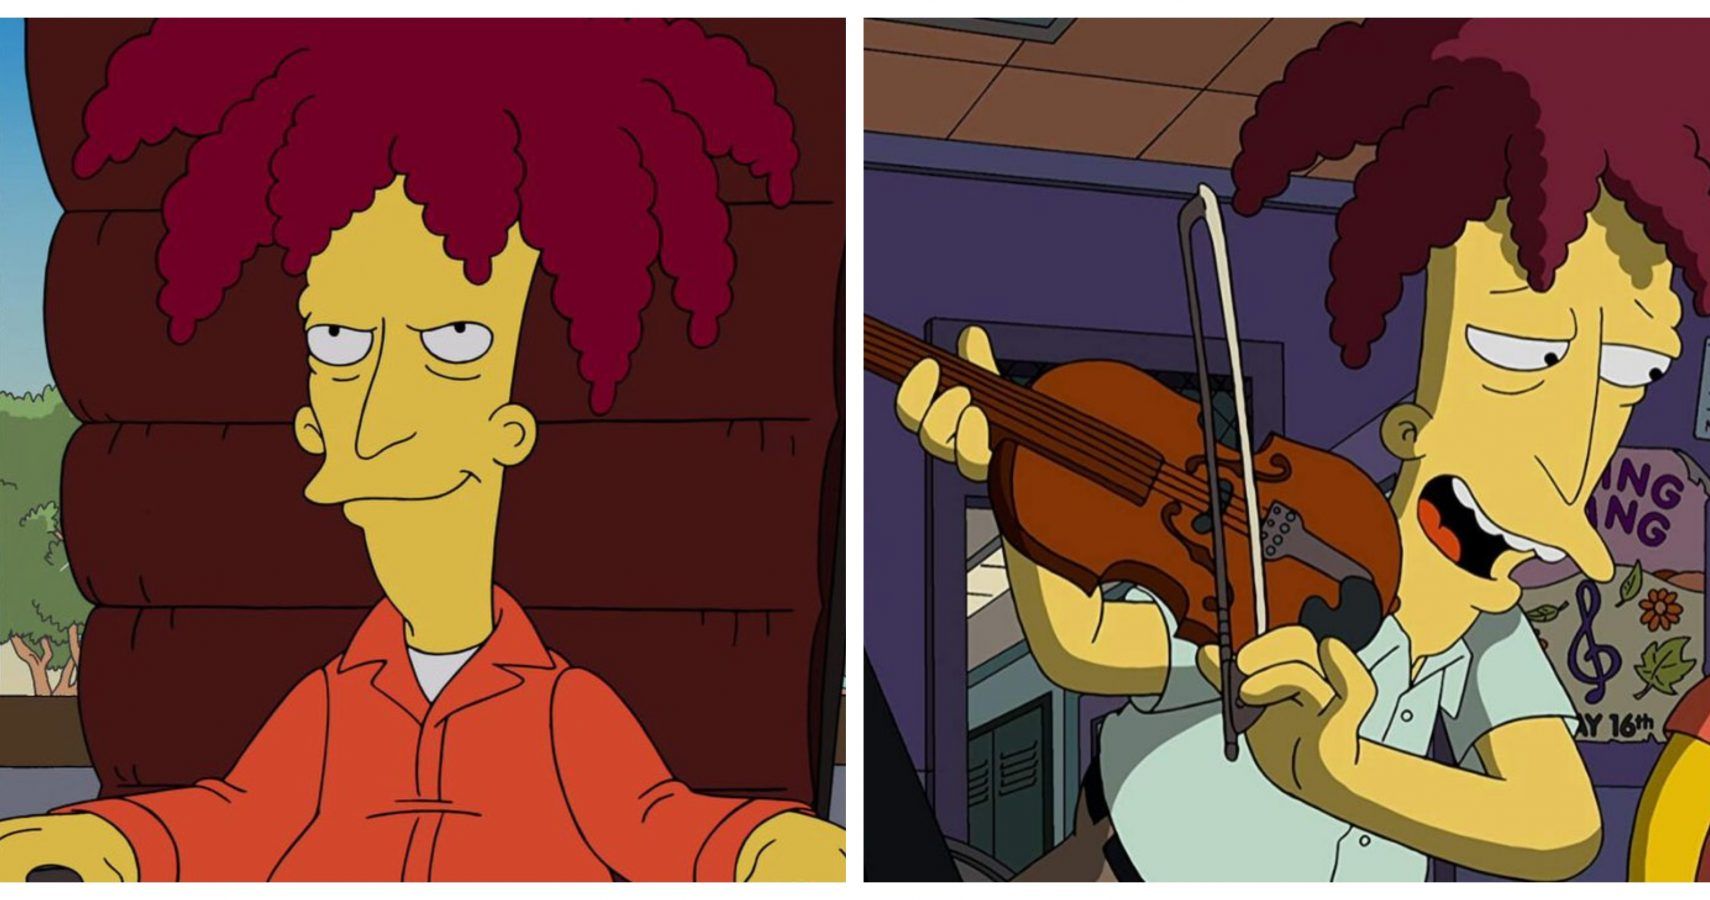 The 10 Best Sideshow Bob Simpsons Episodes According To IMDb.